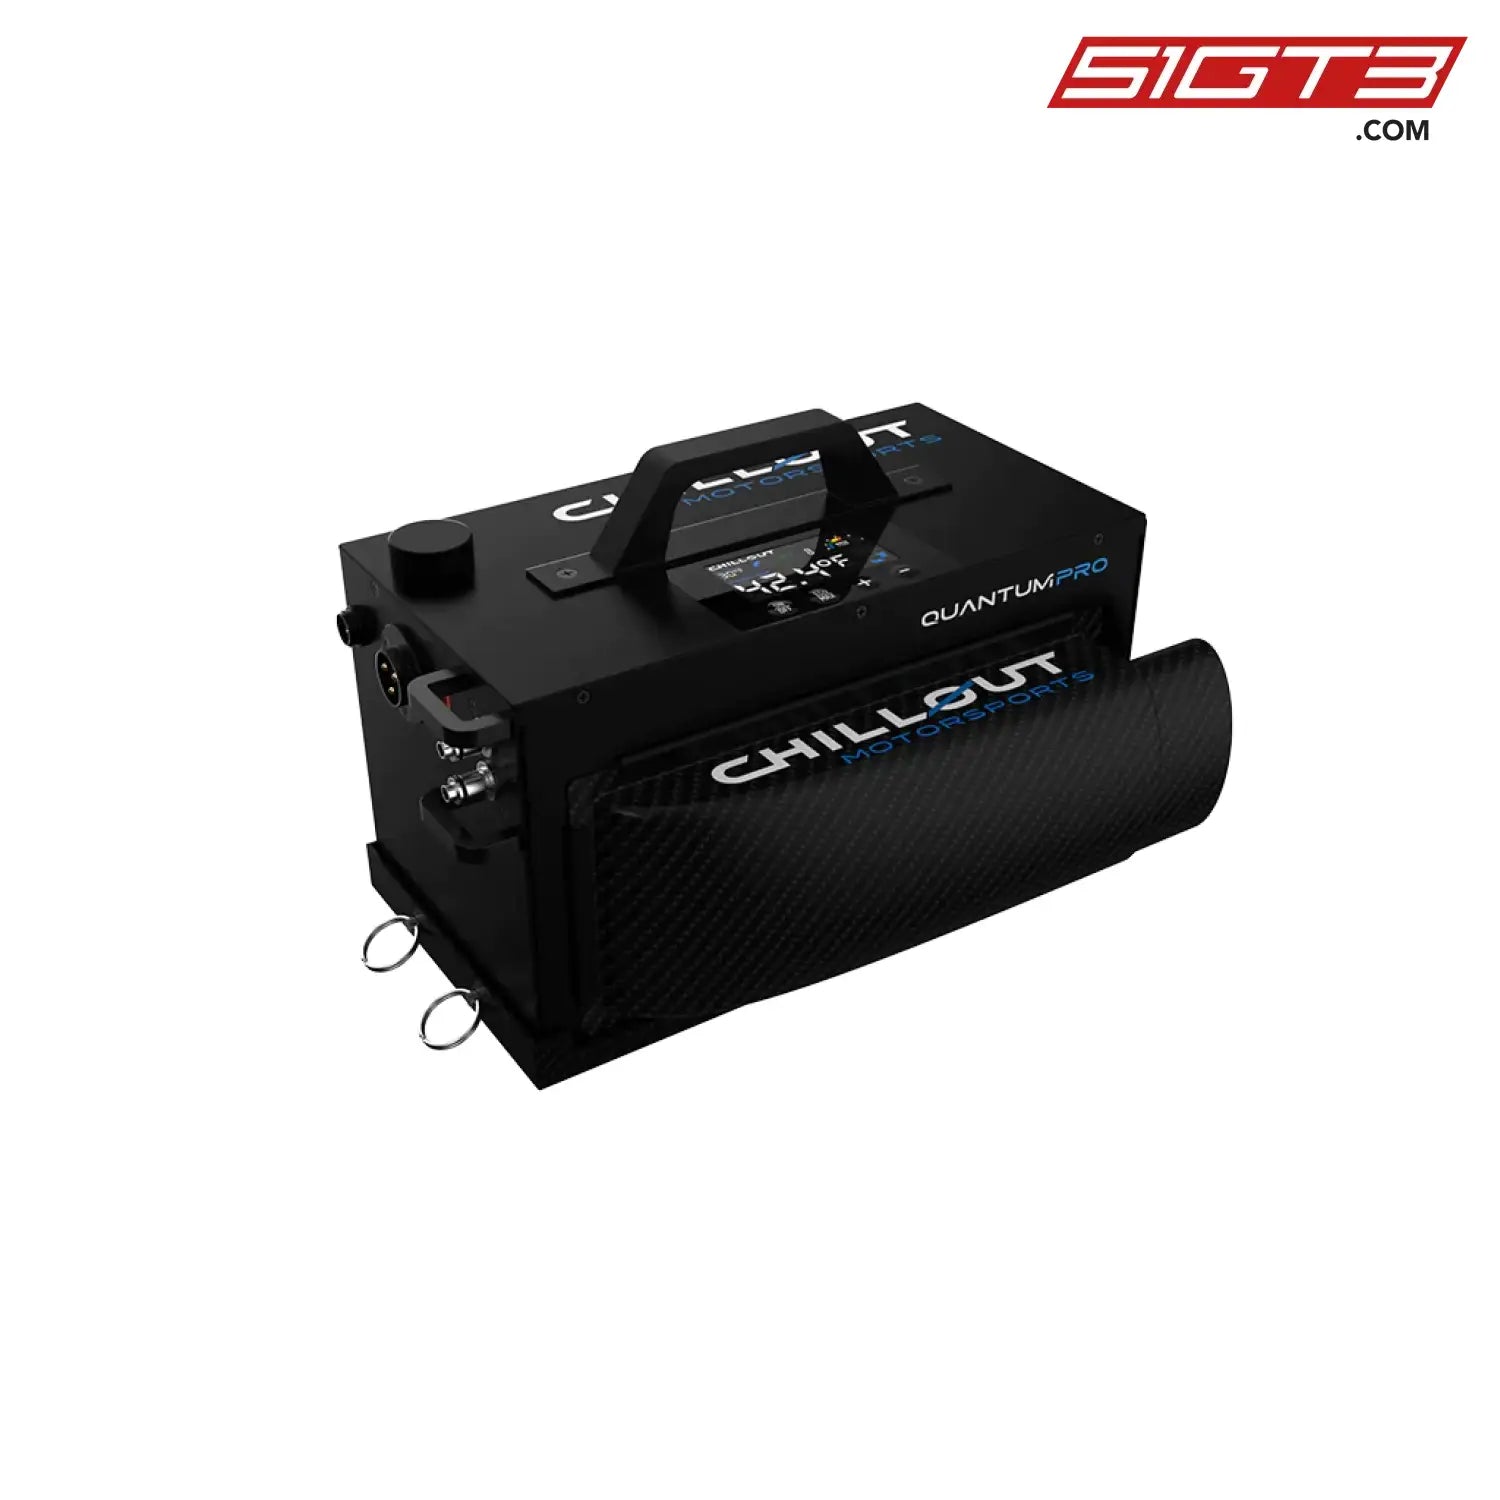 3’ 90º Ultra Slimline Carbon Fiber Plenum - Co-Usp3 [Chillout Systems]